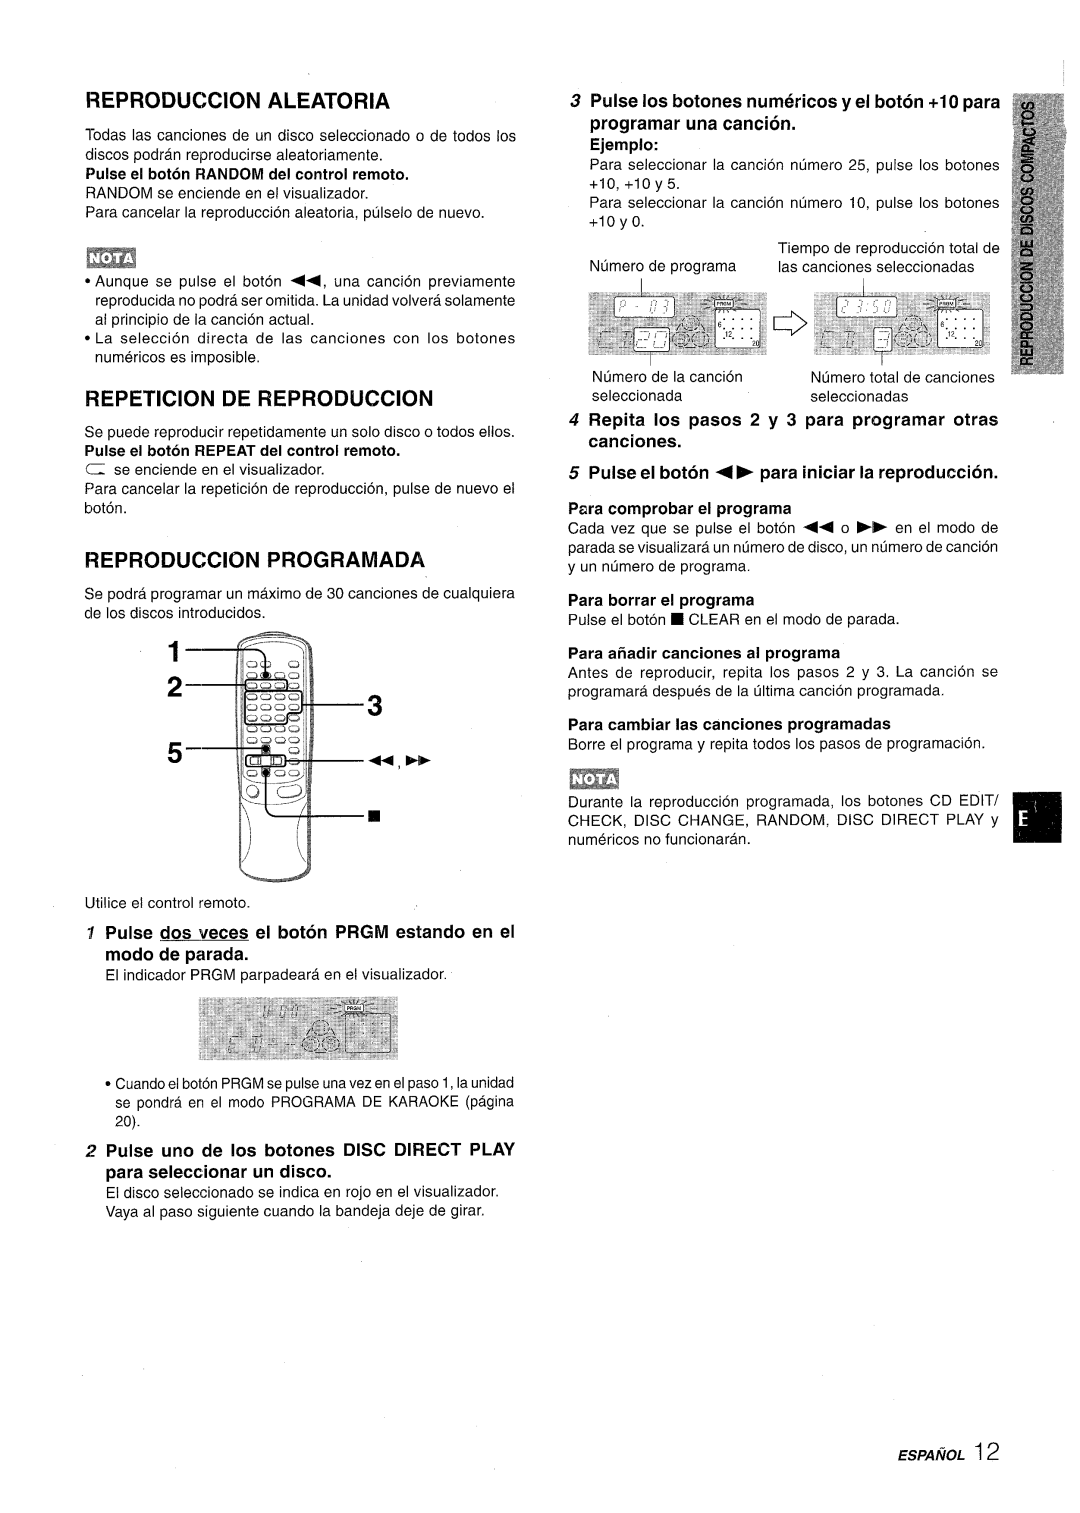 Aiwa NSX-AV800 manual Reproduction Aleatoria, Repetition De Reproduction, FiEPRODUCCION PROGRAMADA, Ejemplo, canciones 